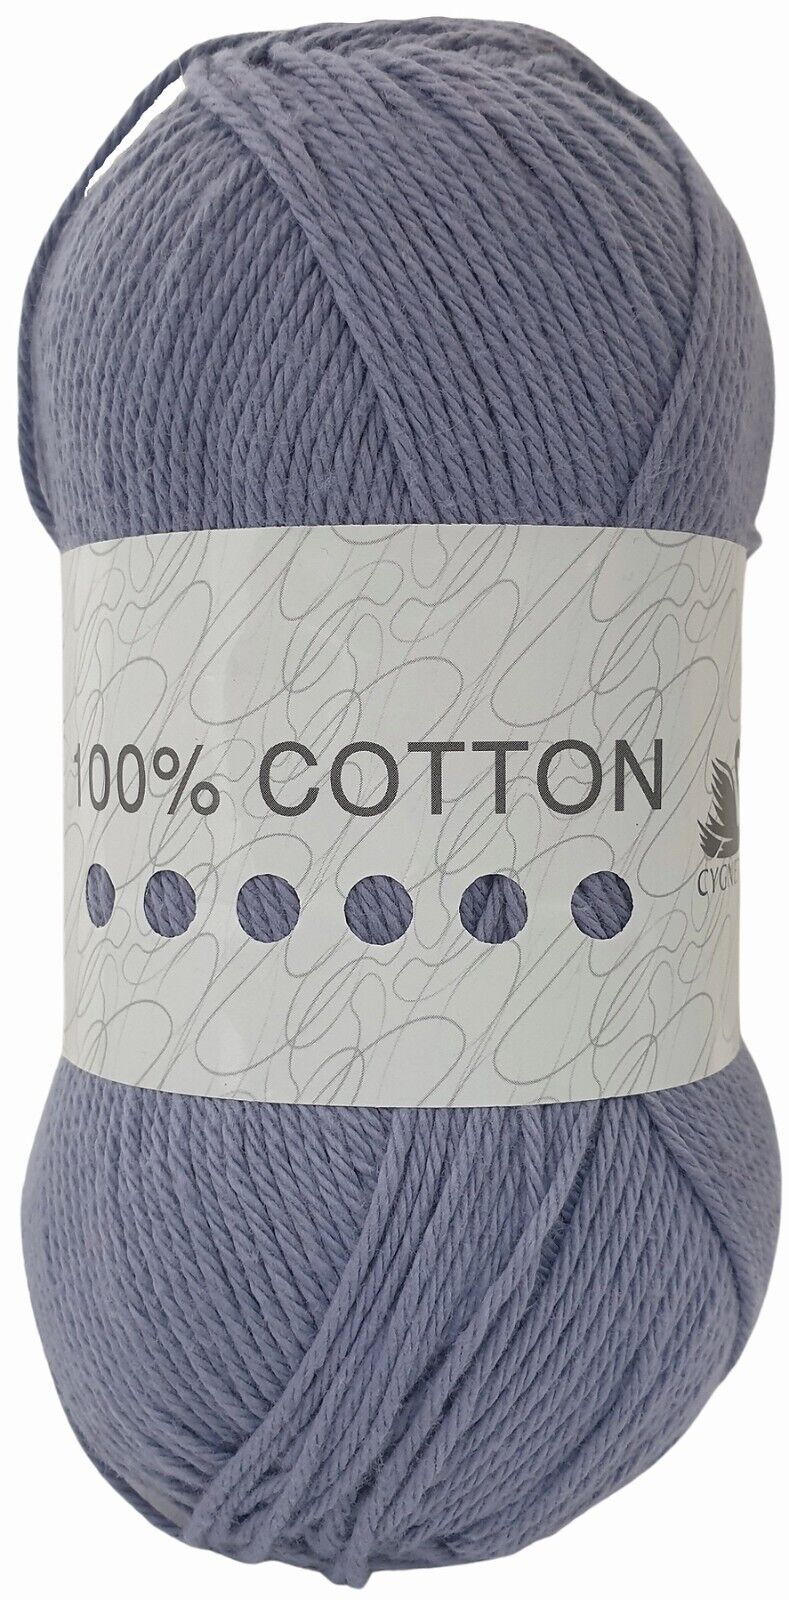 Cygnet 100% COTTON DK Knitting Yarn / Wool - 100g Double Knit Ball - Pansy